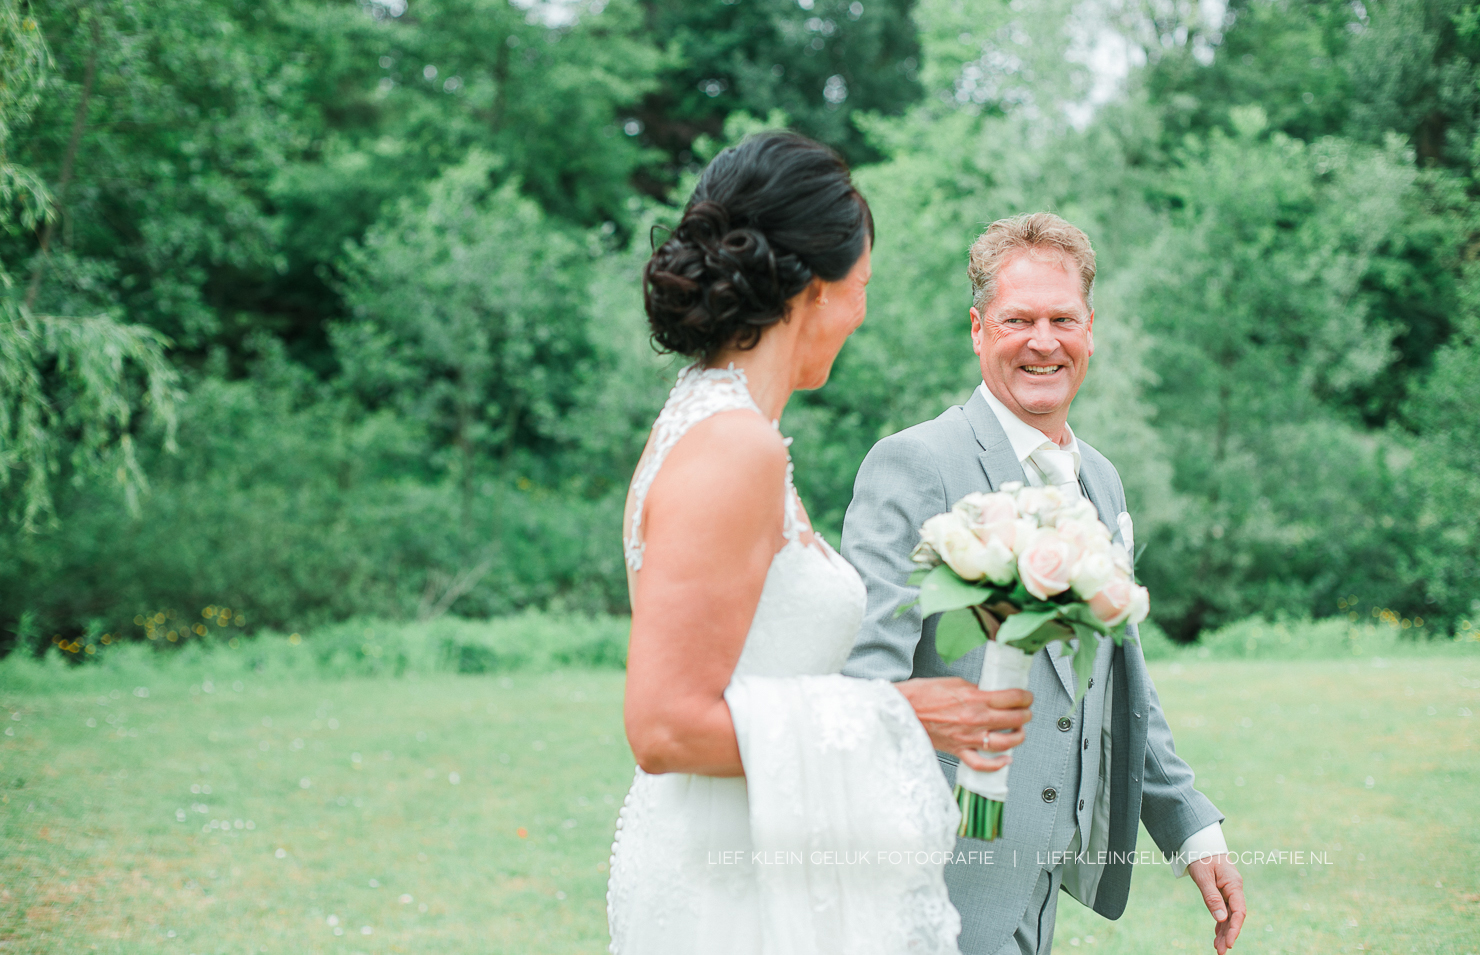 Bruiloft fotografie, bruins fotografie, fotografie noord-holland, wedding fotograaf, lifestyle fotografie